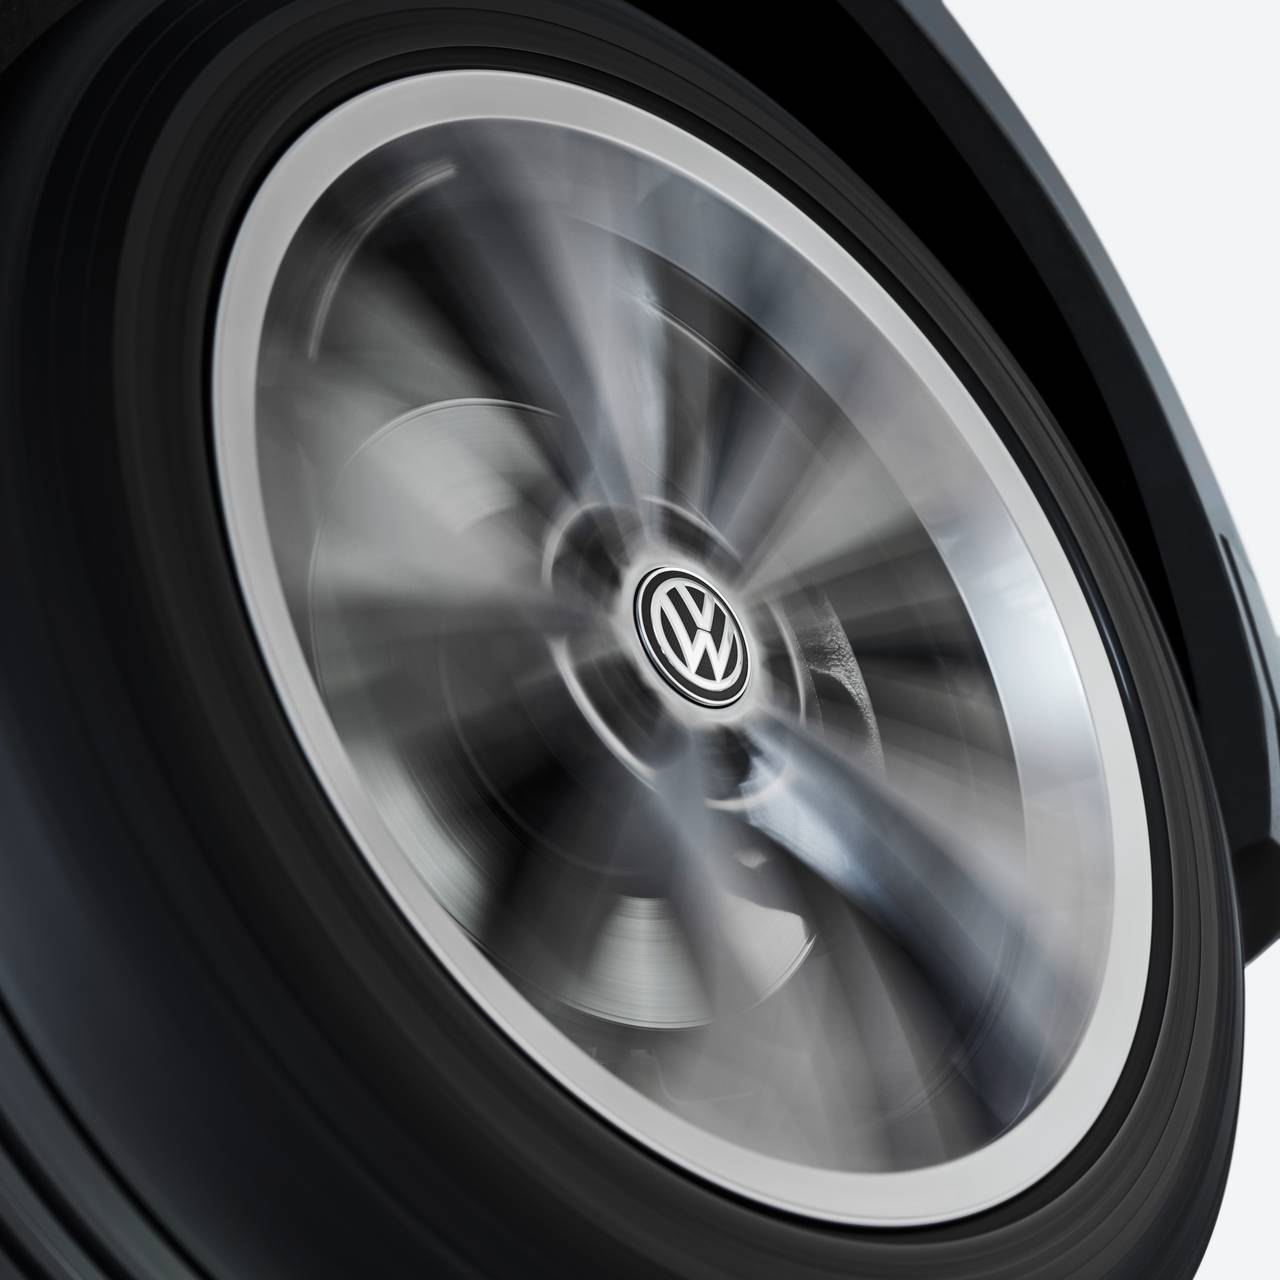 Volkswagen dynamic center cap